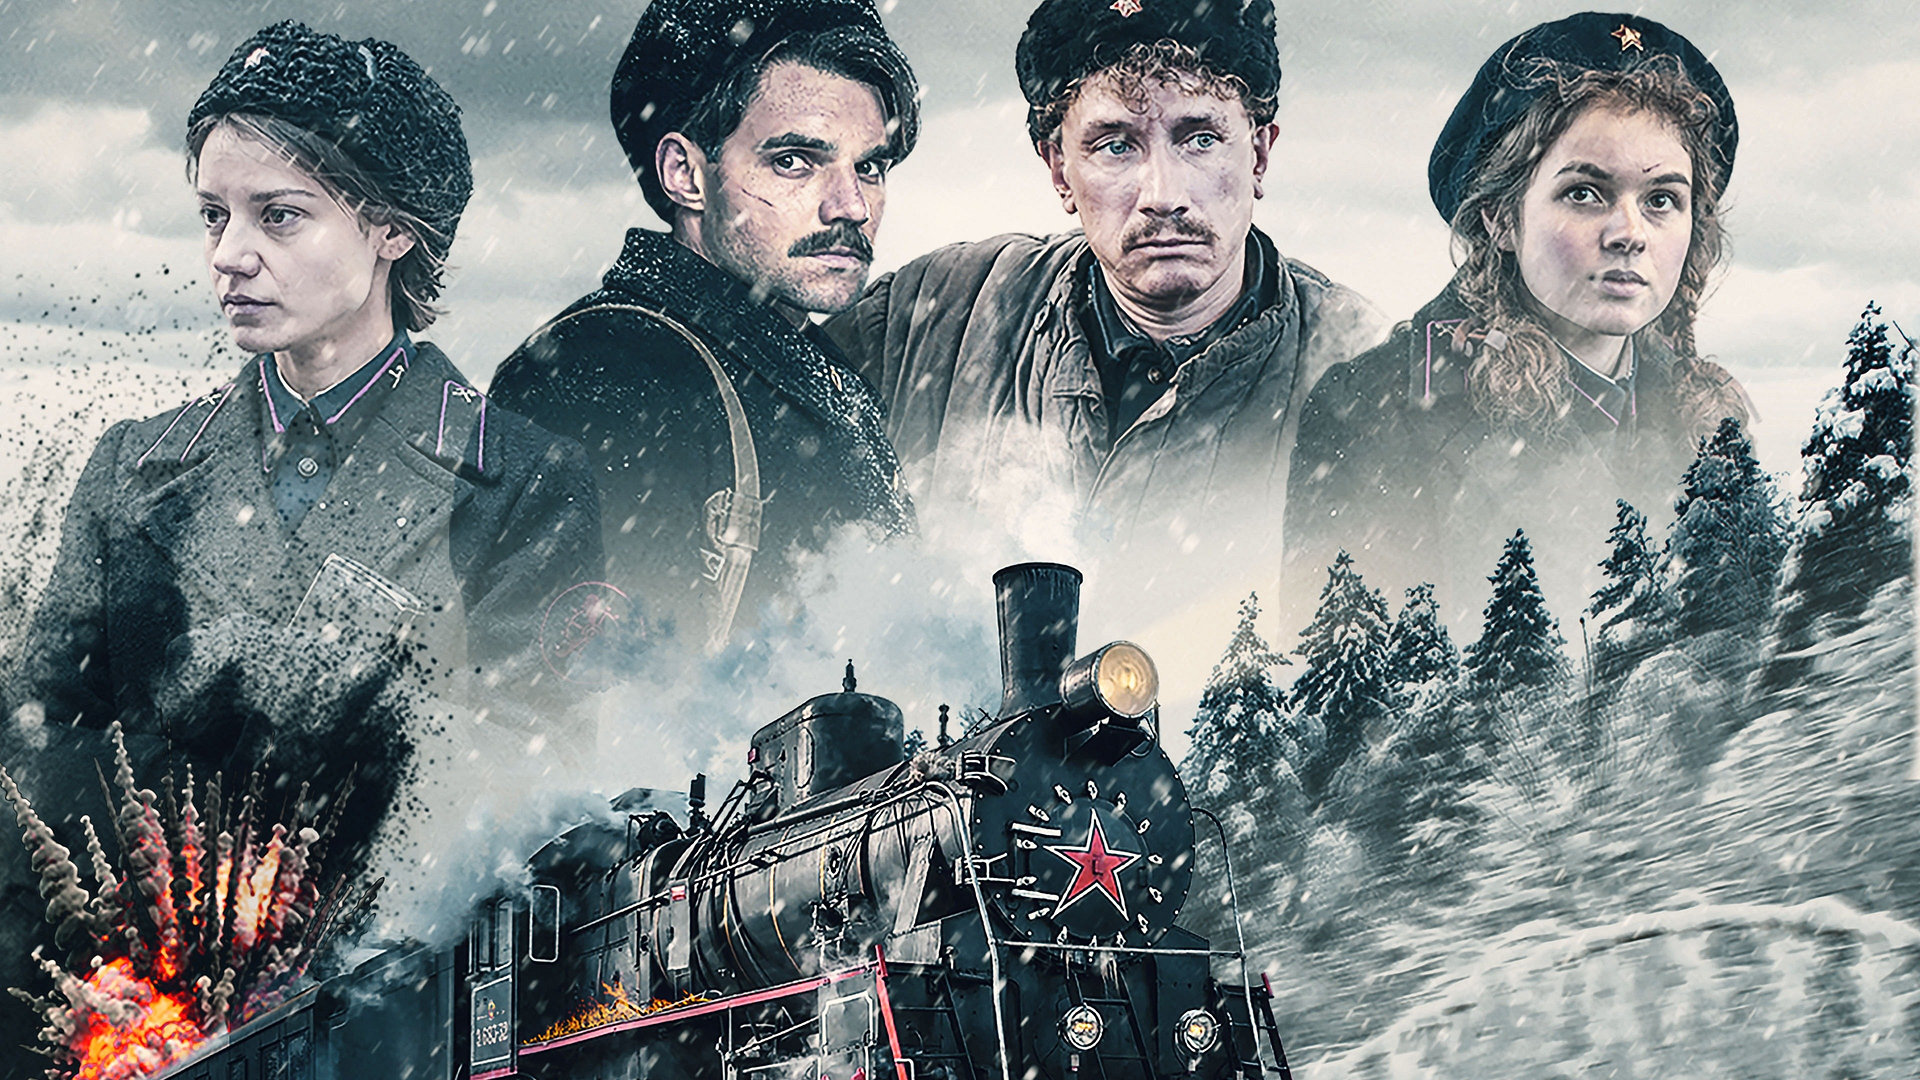 The War Train to Leningrad